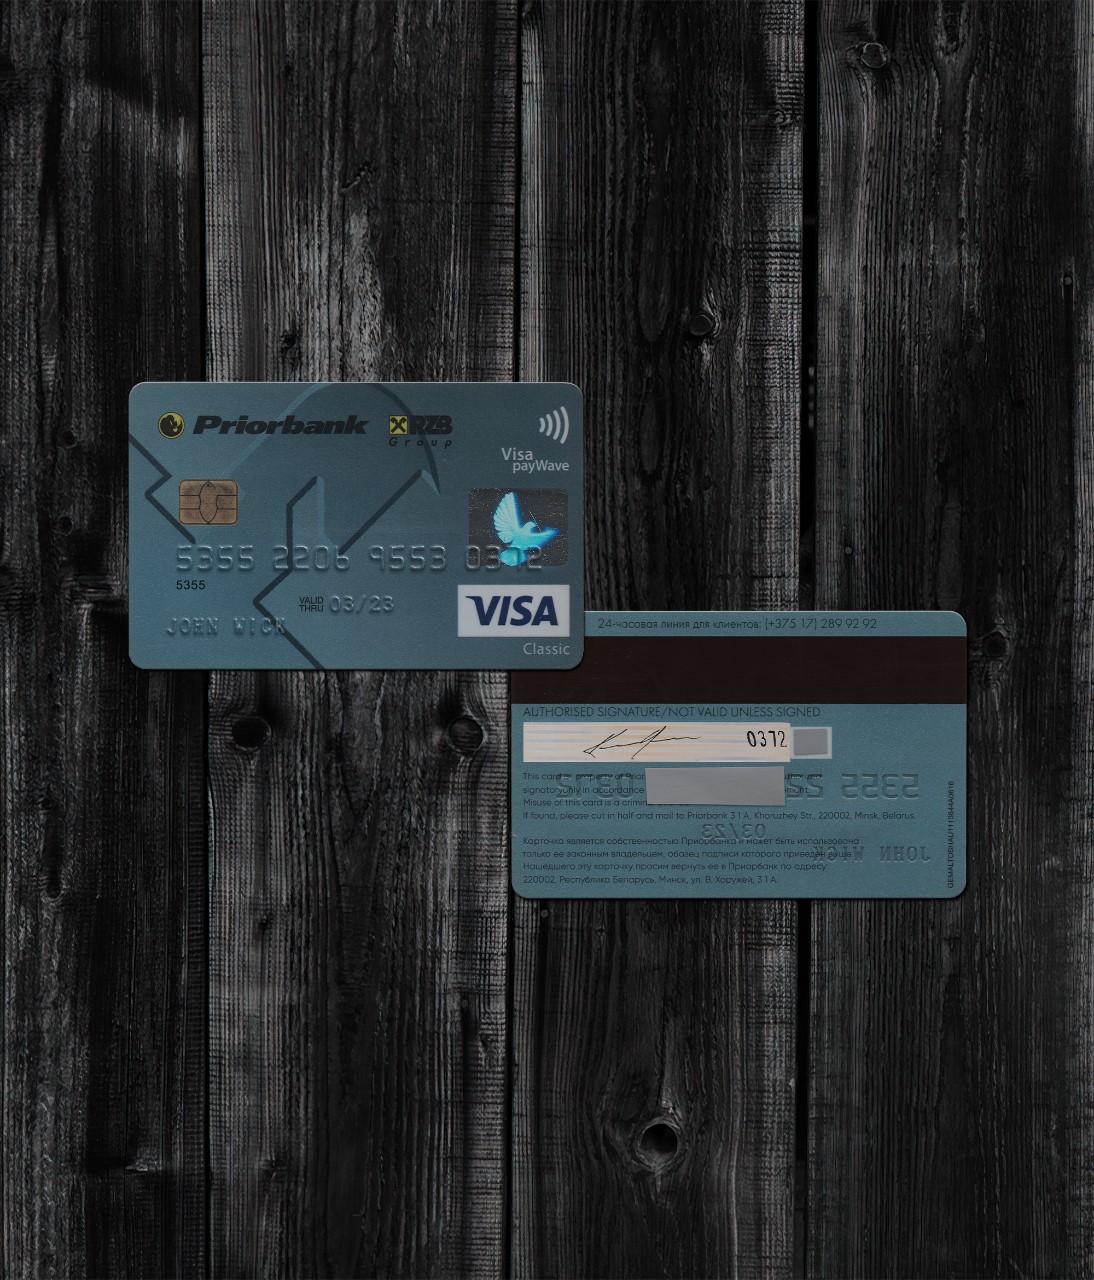 PriorBank Credit Card PSD2